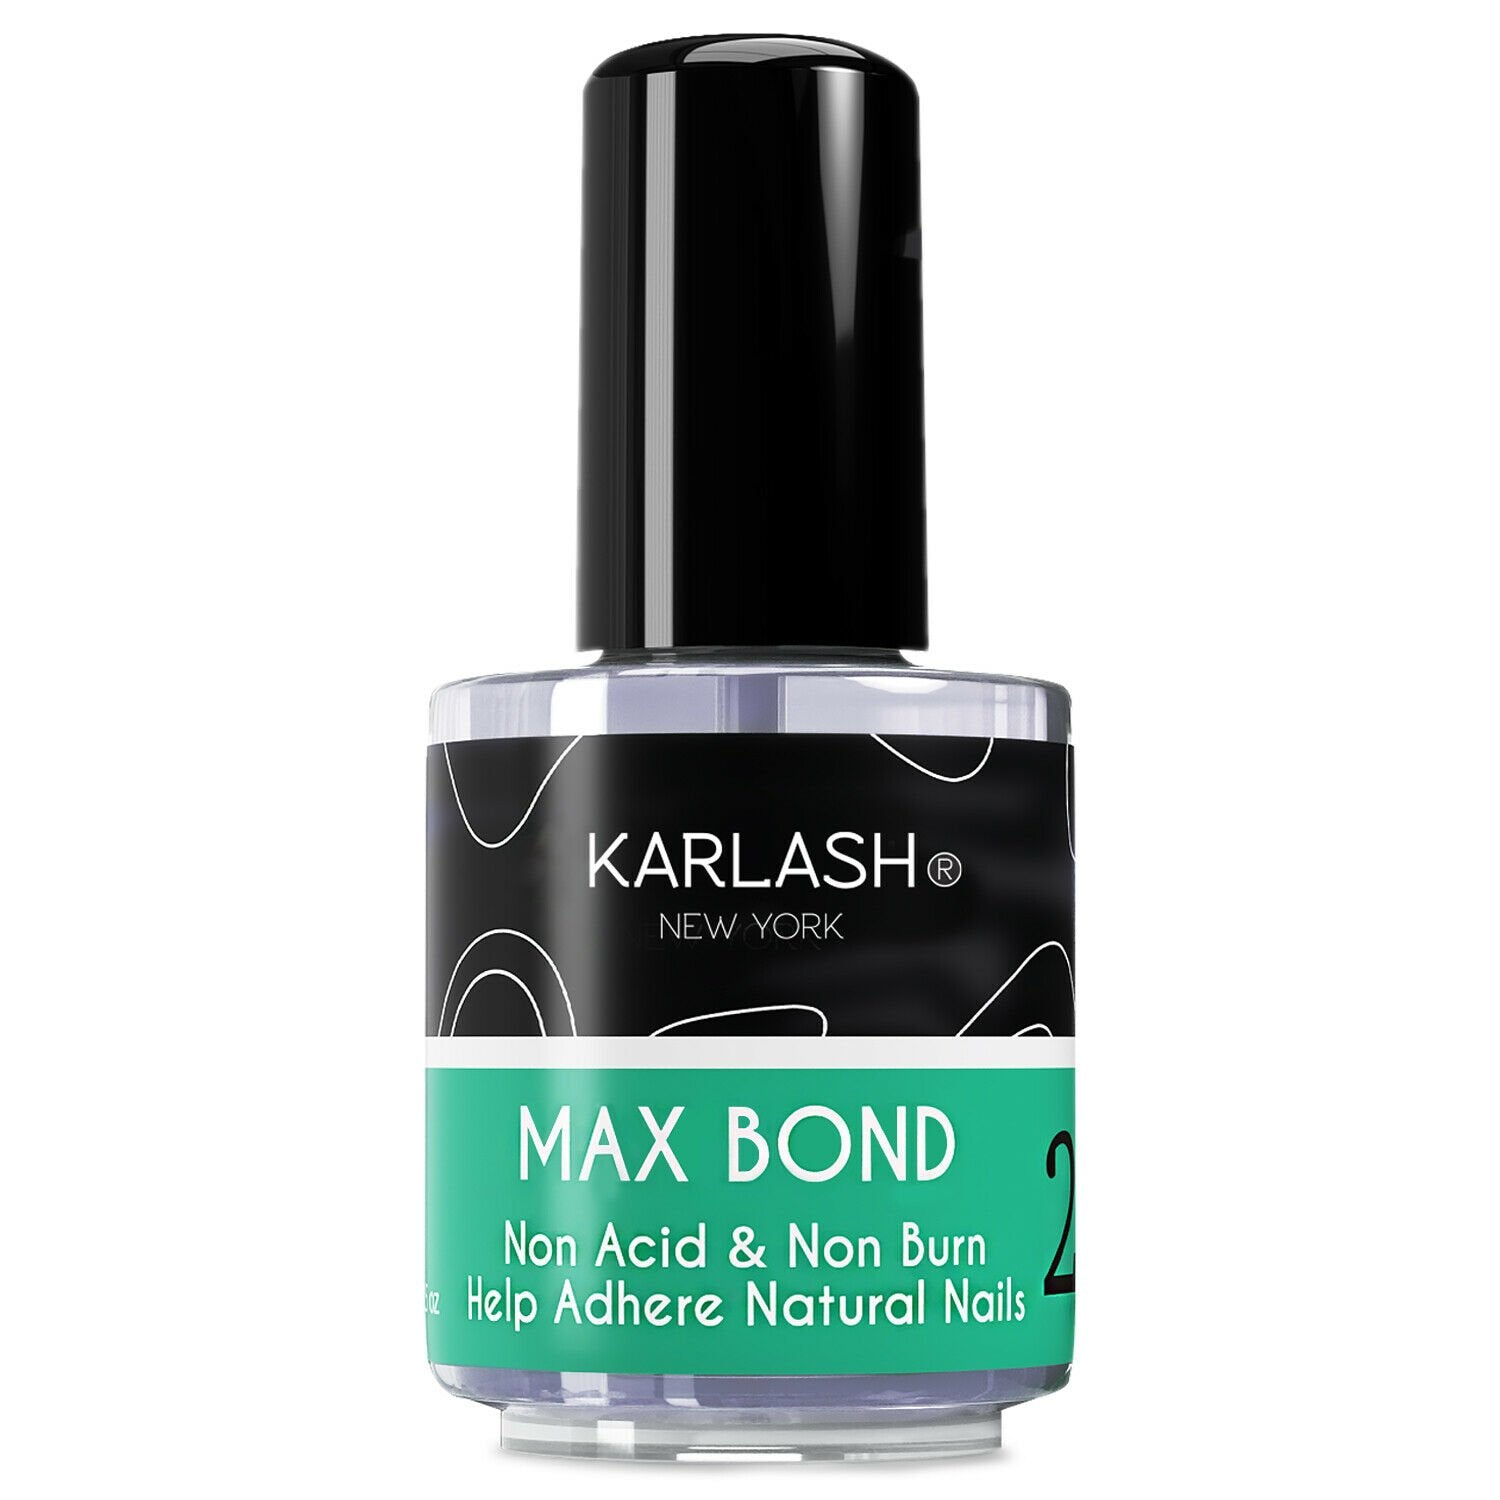 Karlash Professional Nail Prep Bond Primer & Prep dehydrate 0.5 oz Help Adhere Natural Nails Non Acid